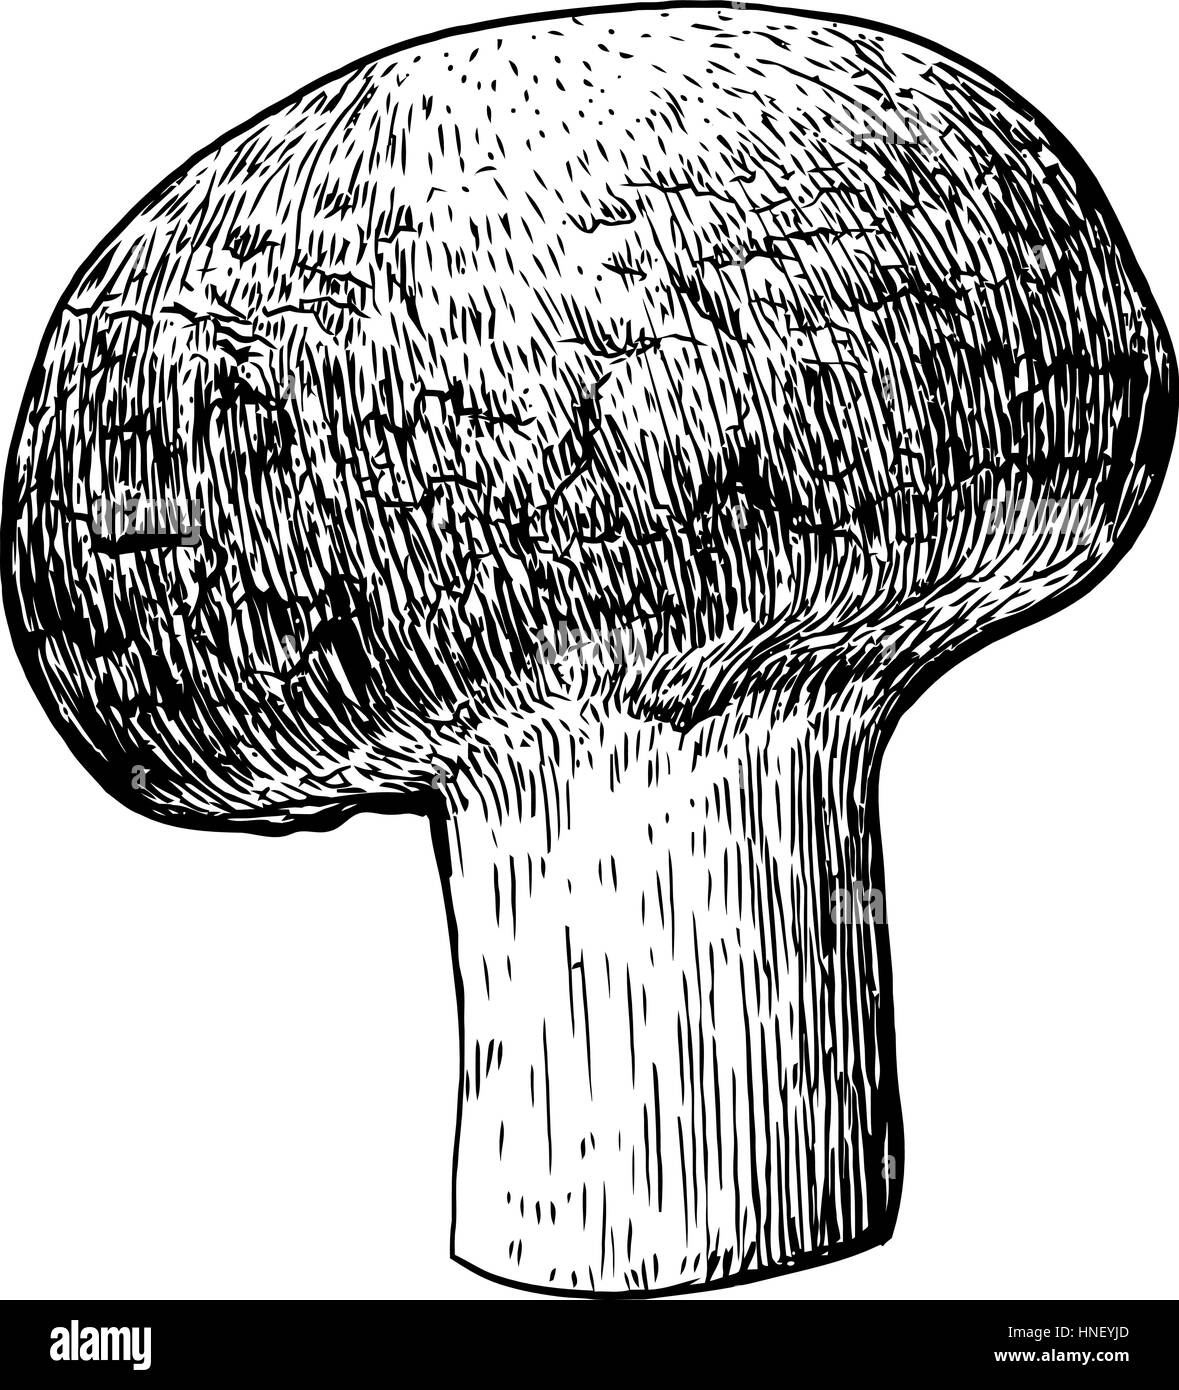 Champignon mushroom illustration, drawing, engraving, line art Stock Vector